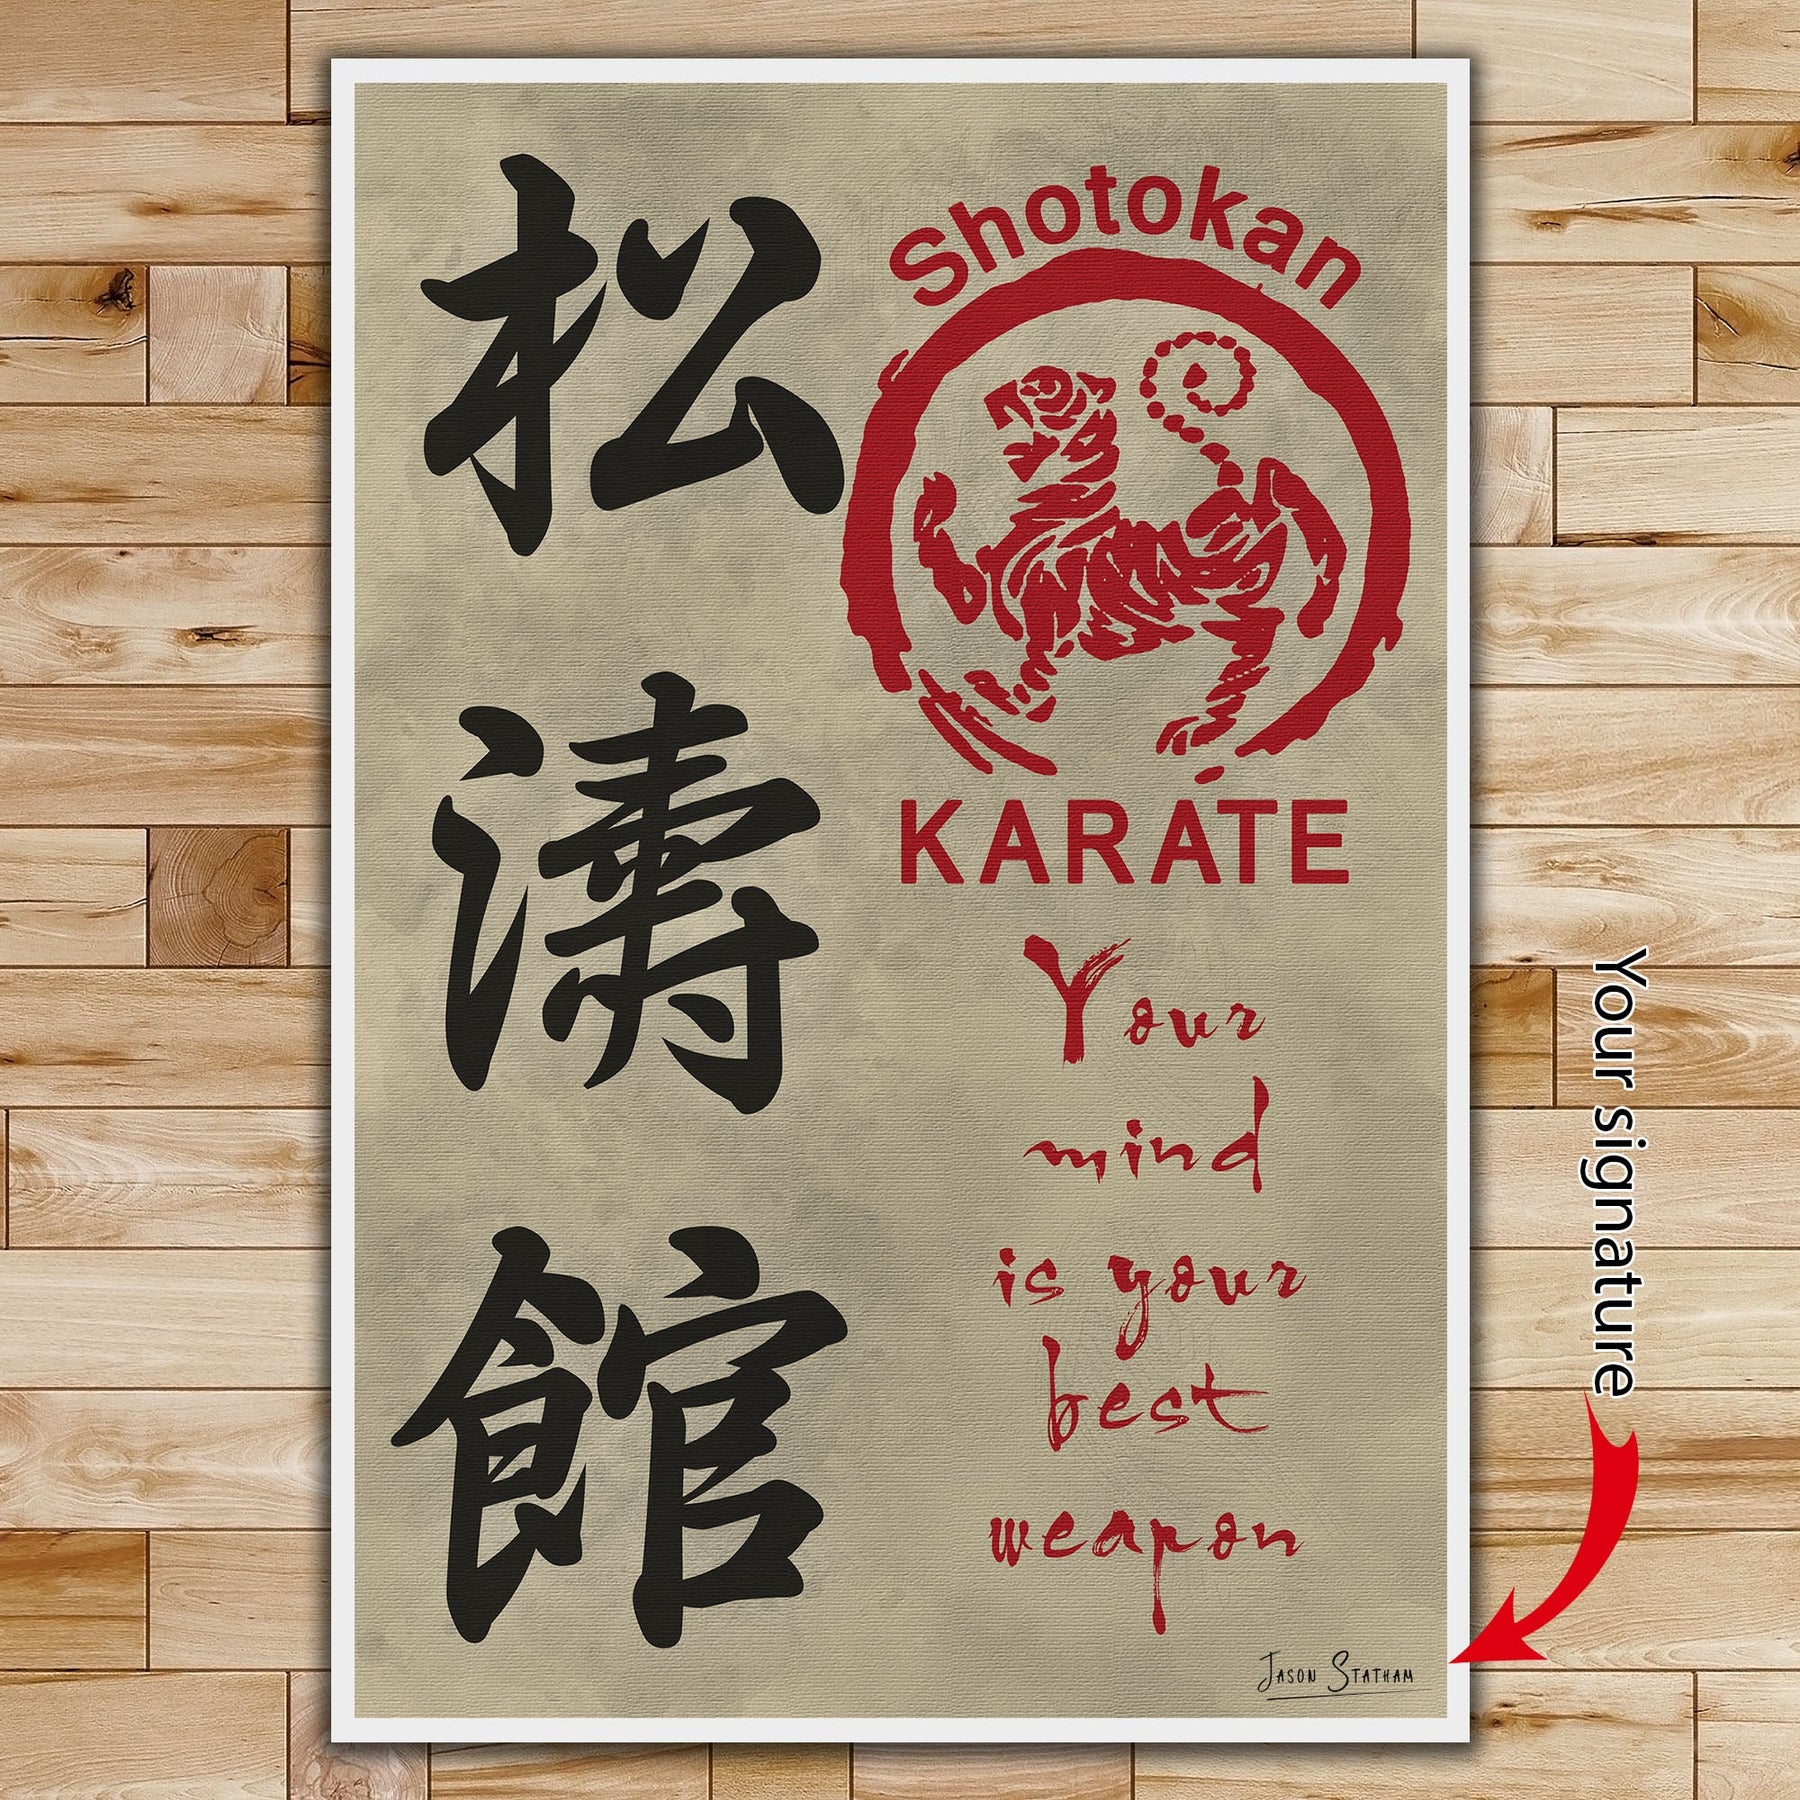 KA040 - Your Mind Is Your Best Weapon - Shotokan Karate - Vertical Poster - Vertical Canvas - Karate Poster